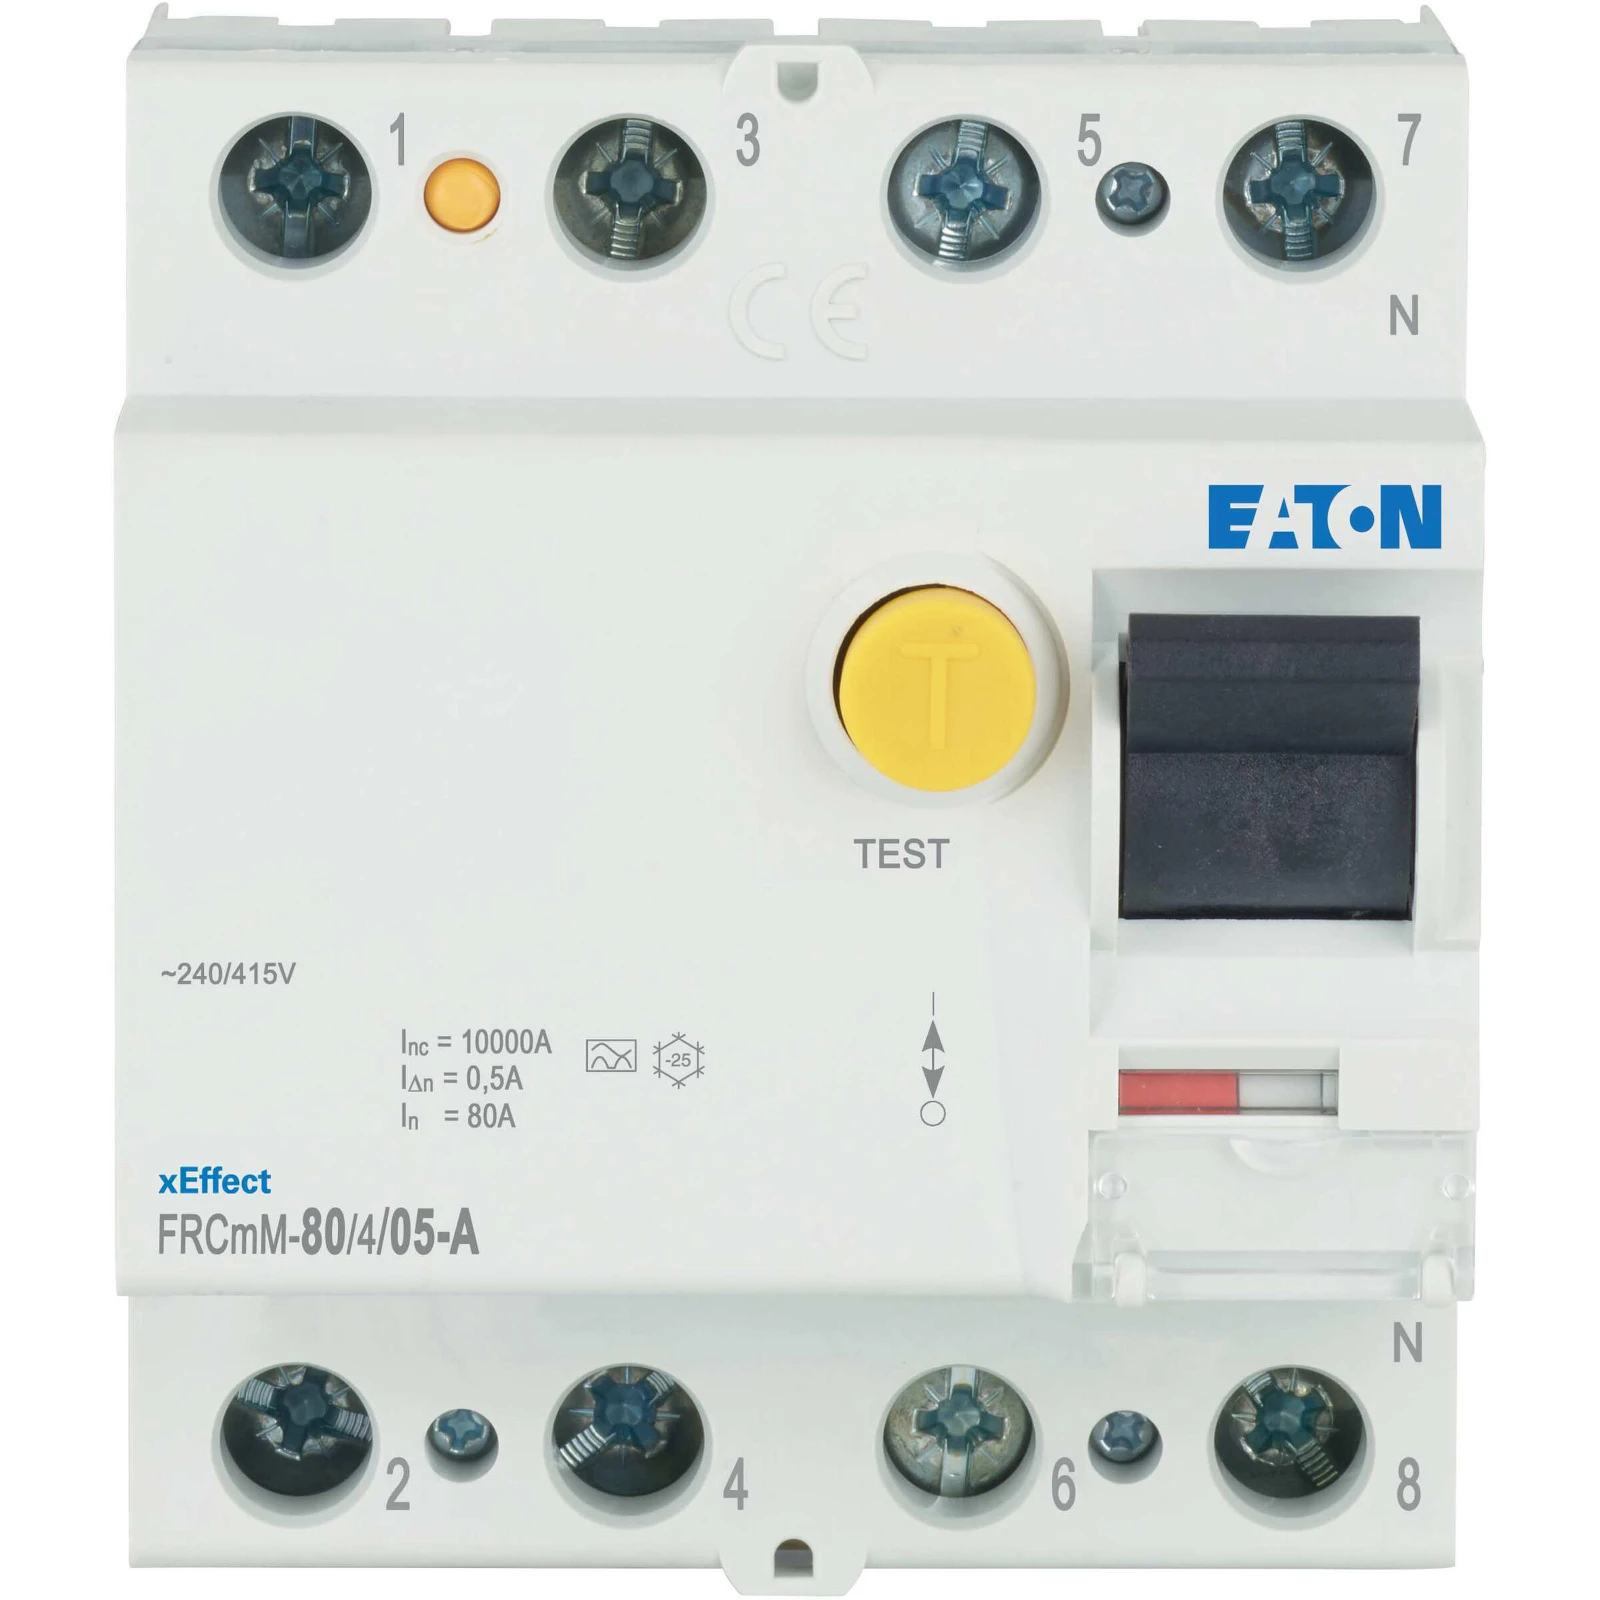 1167667 - Eaton FRCMM-80/4/05-A